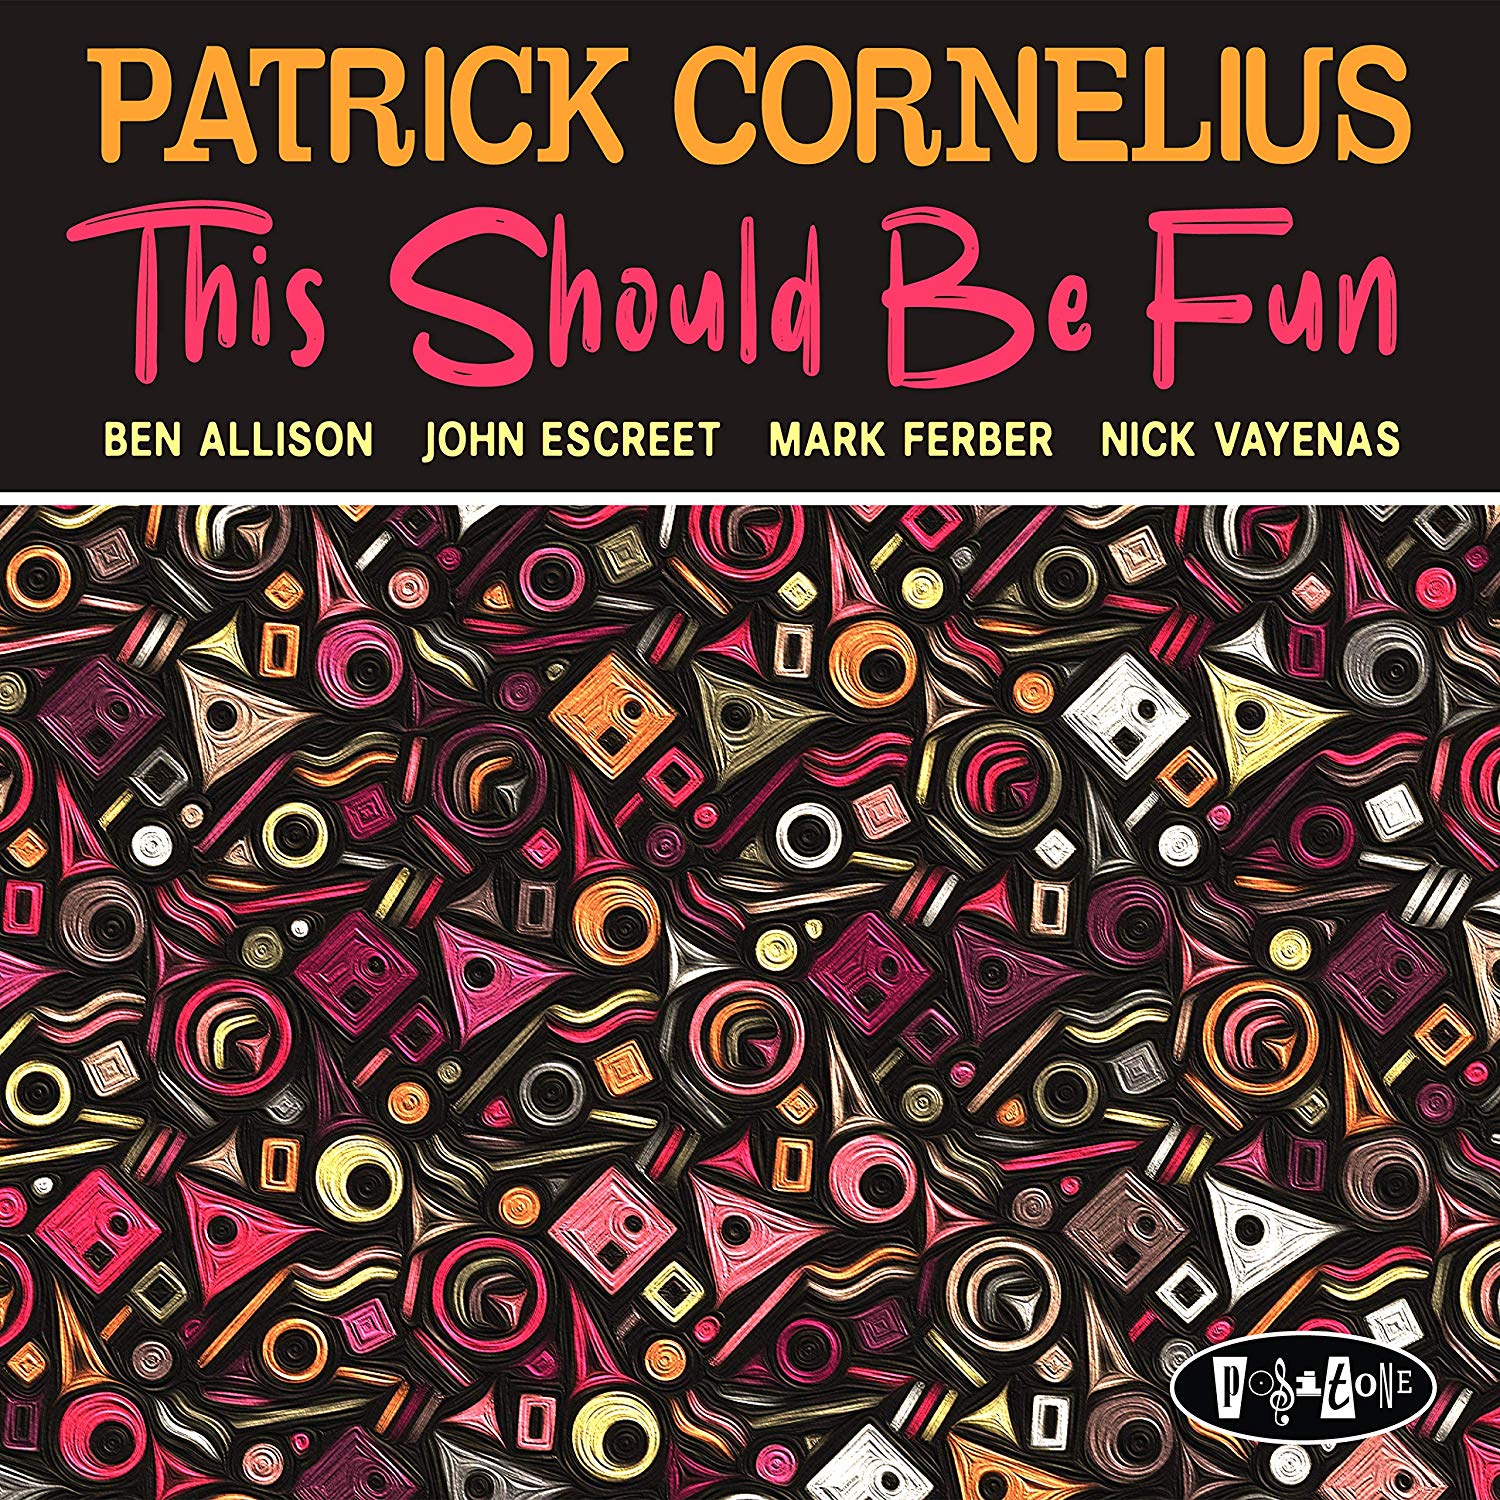 PATRICK CORNELIUS - This Should Be Fun cover 